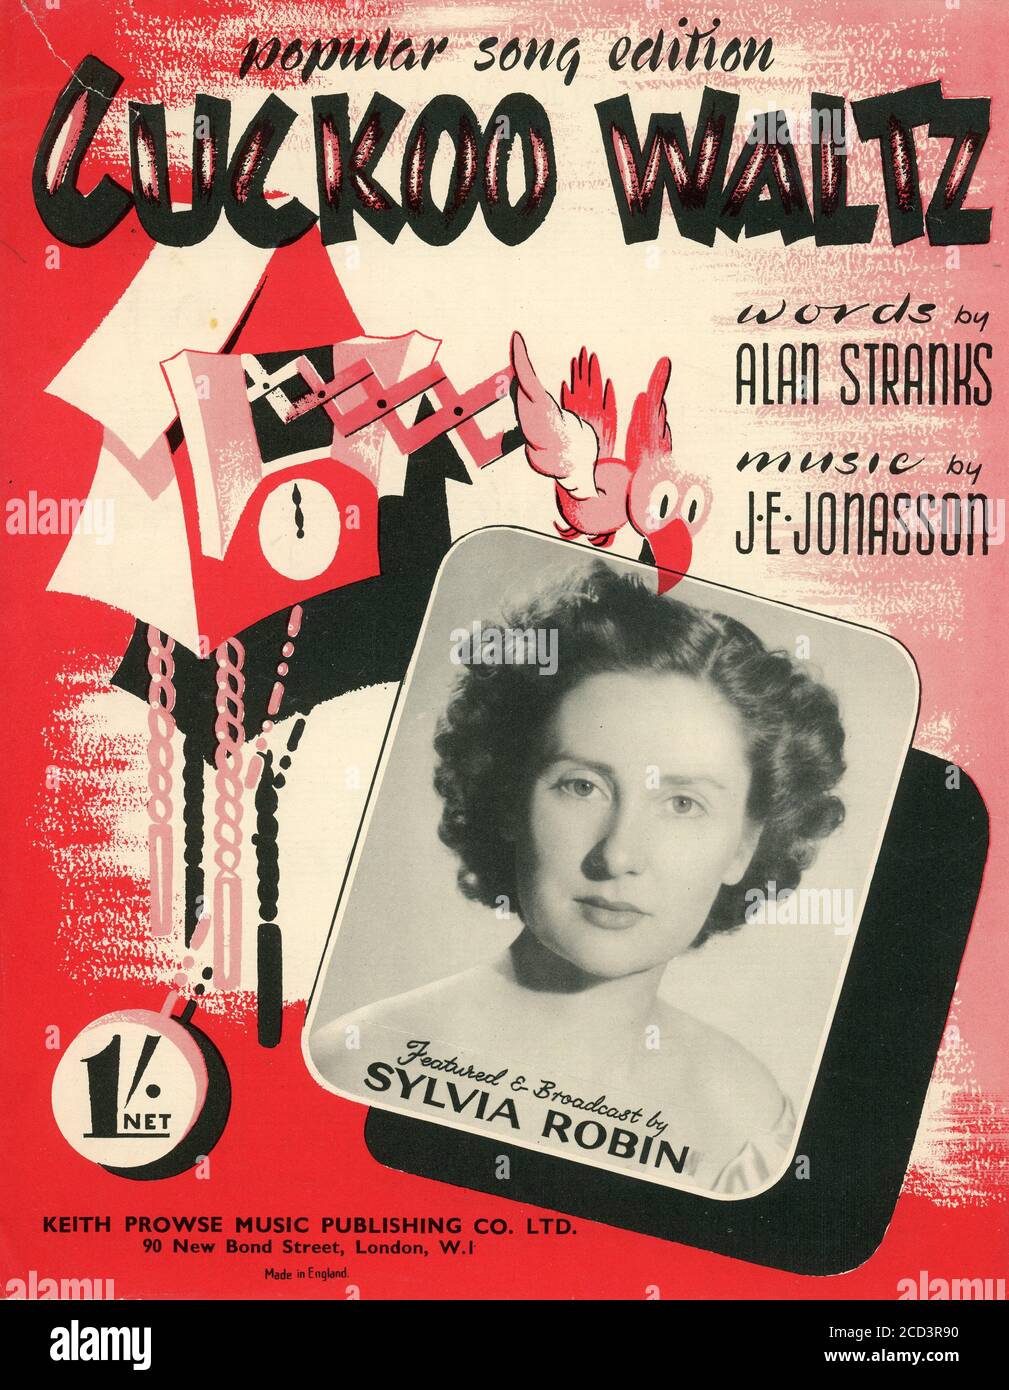 Sheet Music - Cuckoo Waltz - Sylvia Robin - 1948 Stock Photo